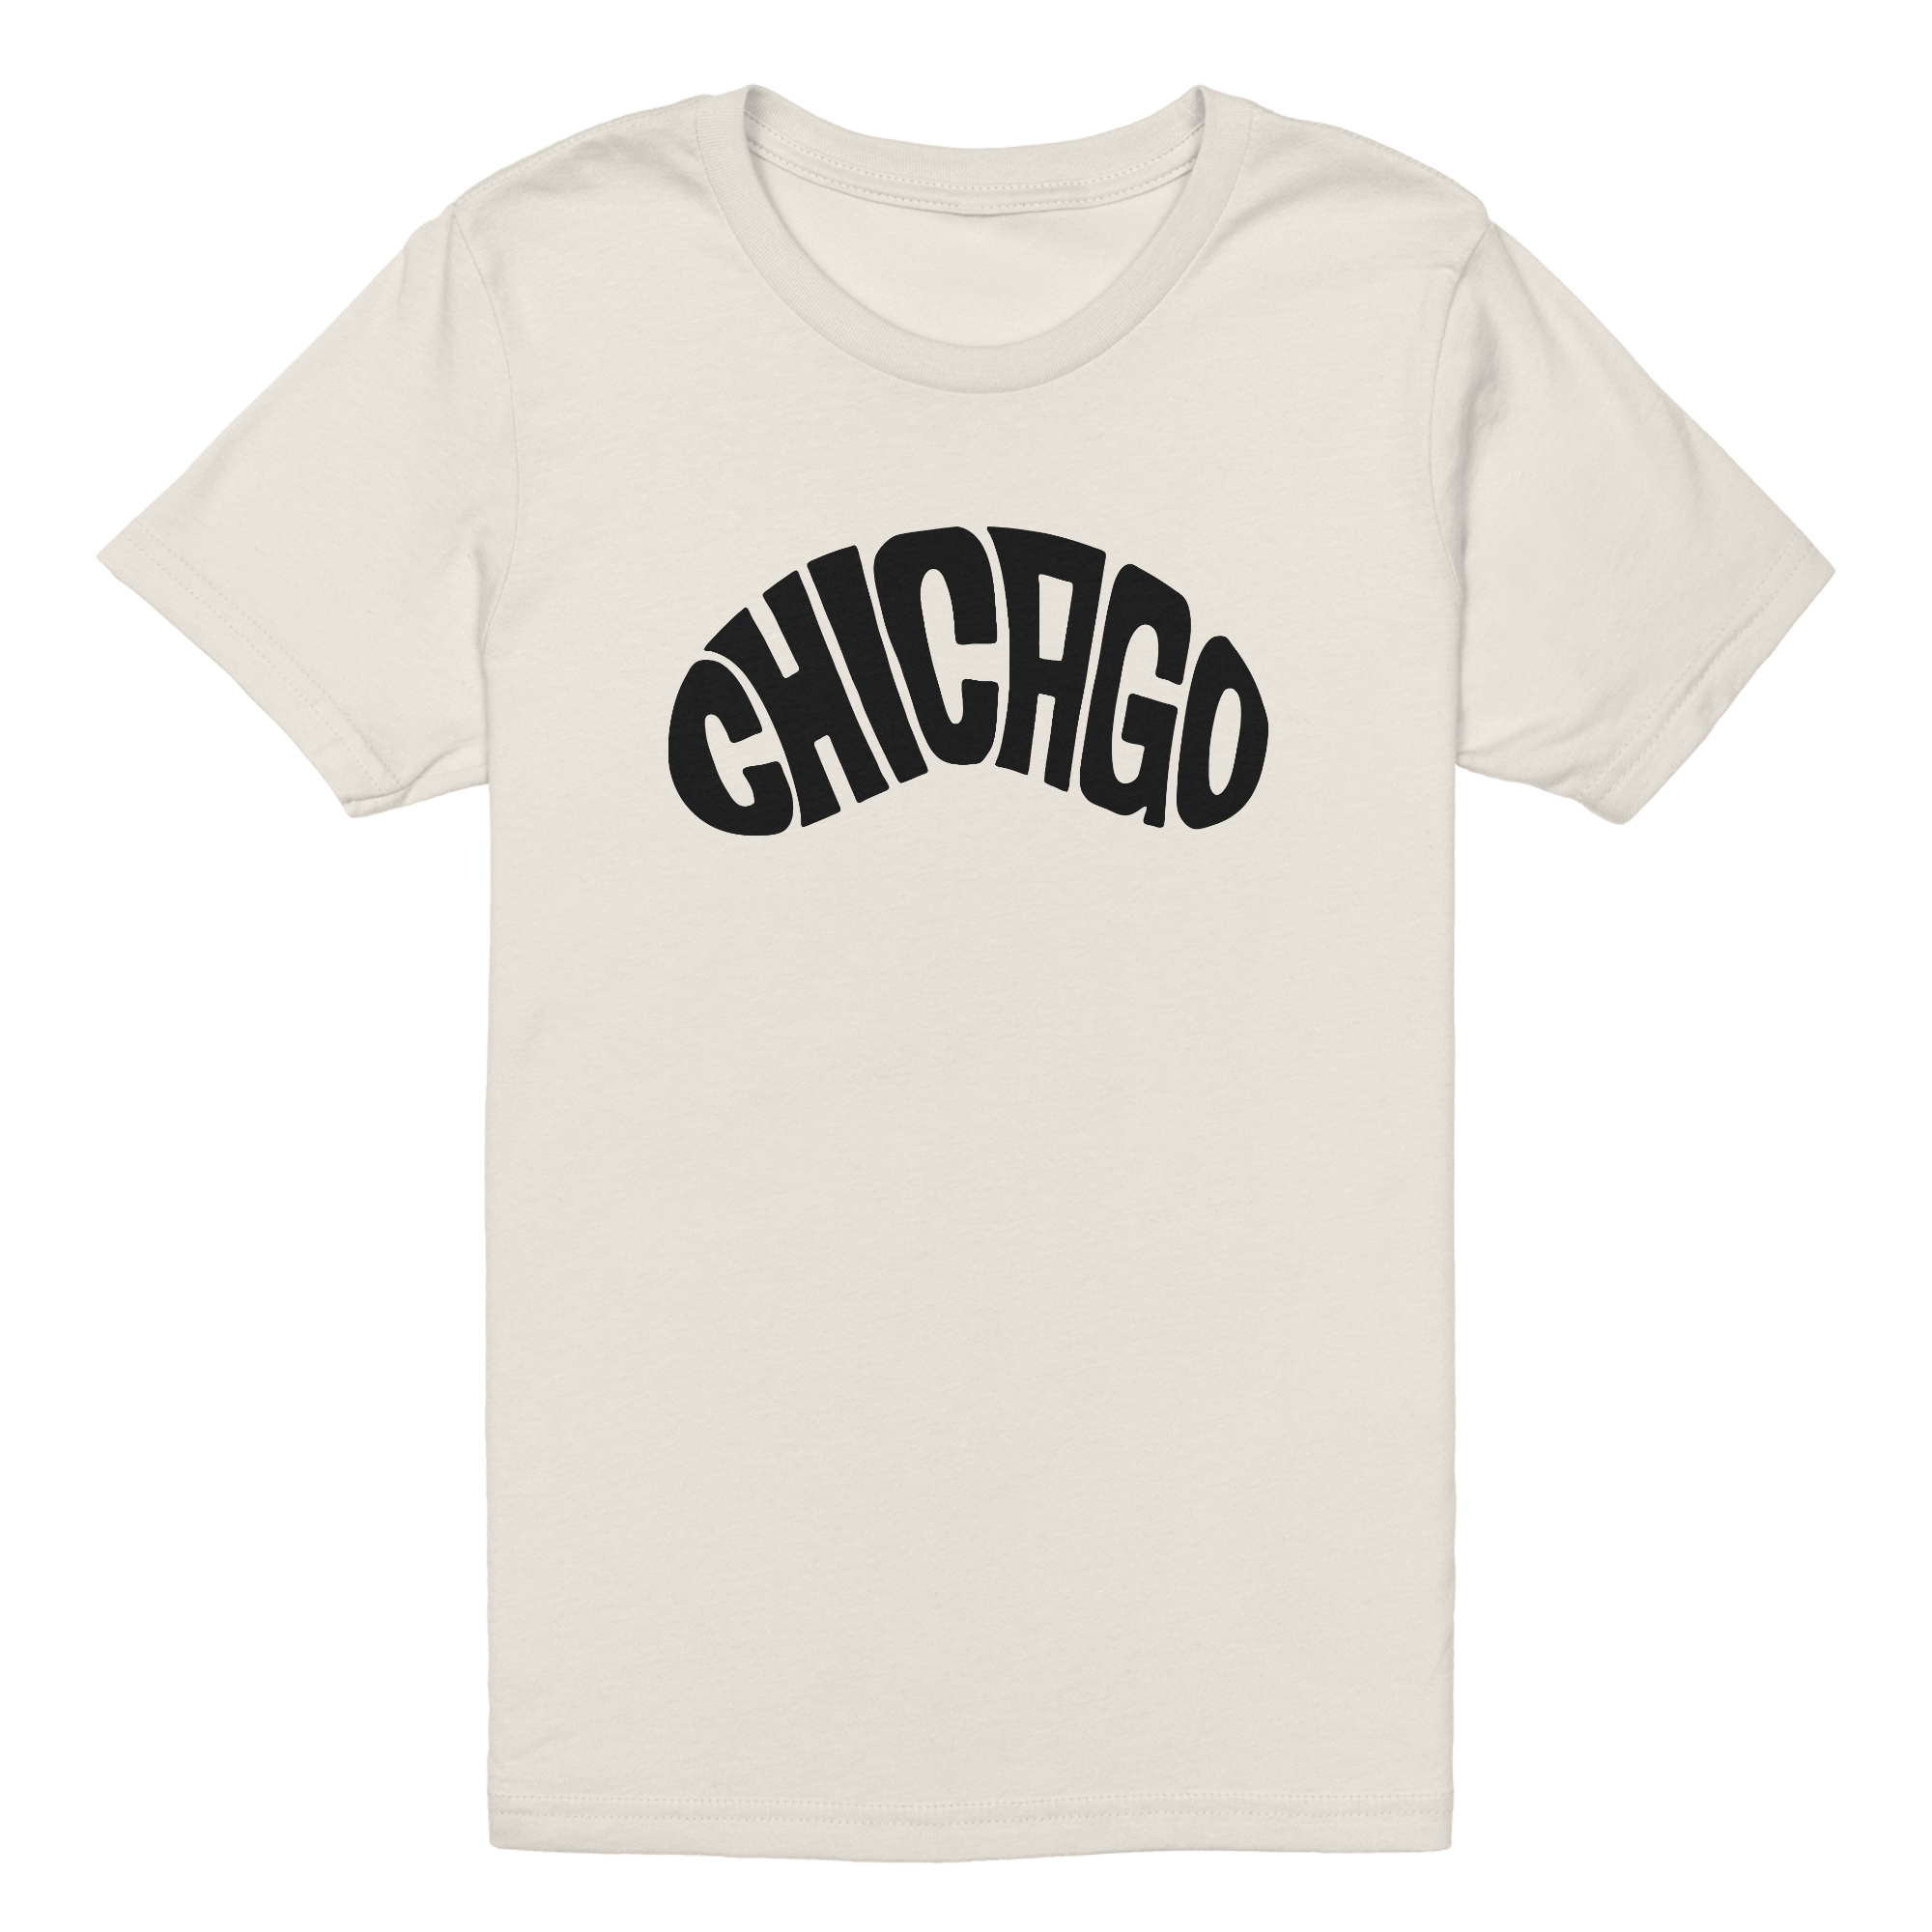 The T-Shirt Deli, Co. Chicago Bean T